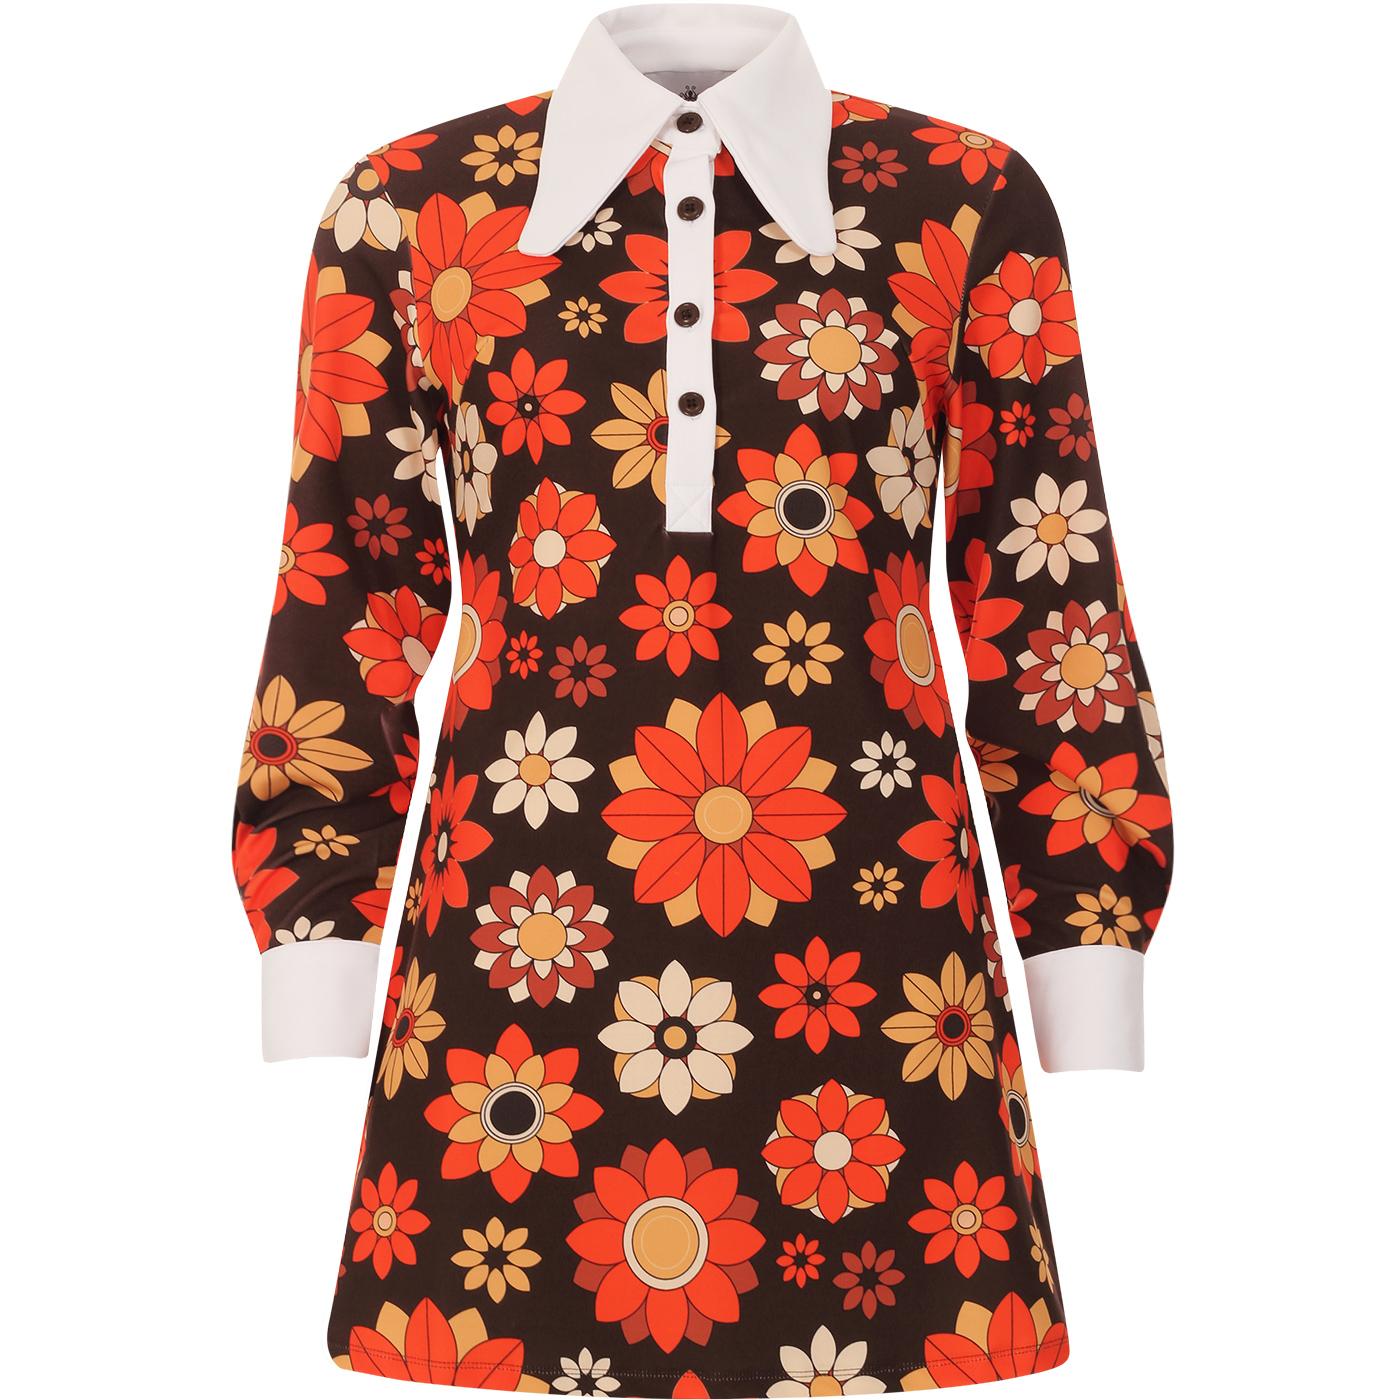 madcap england womens 60s bold floral pattern contrast collar daydream dress brown orange